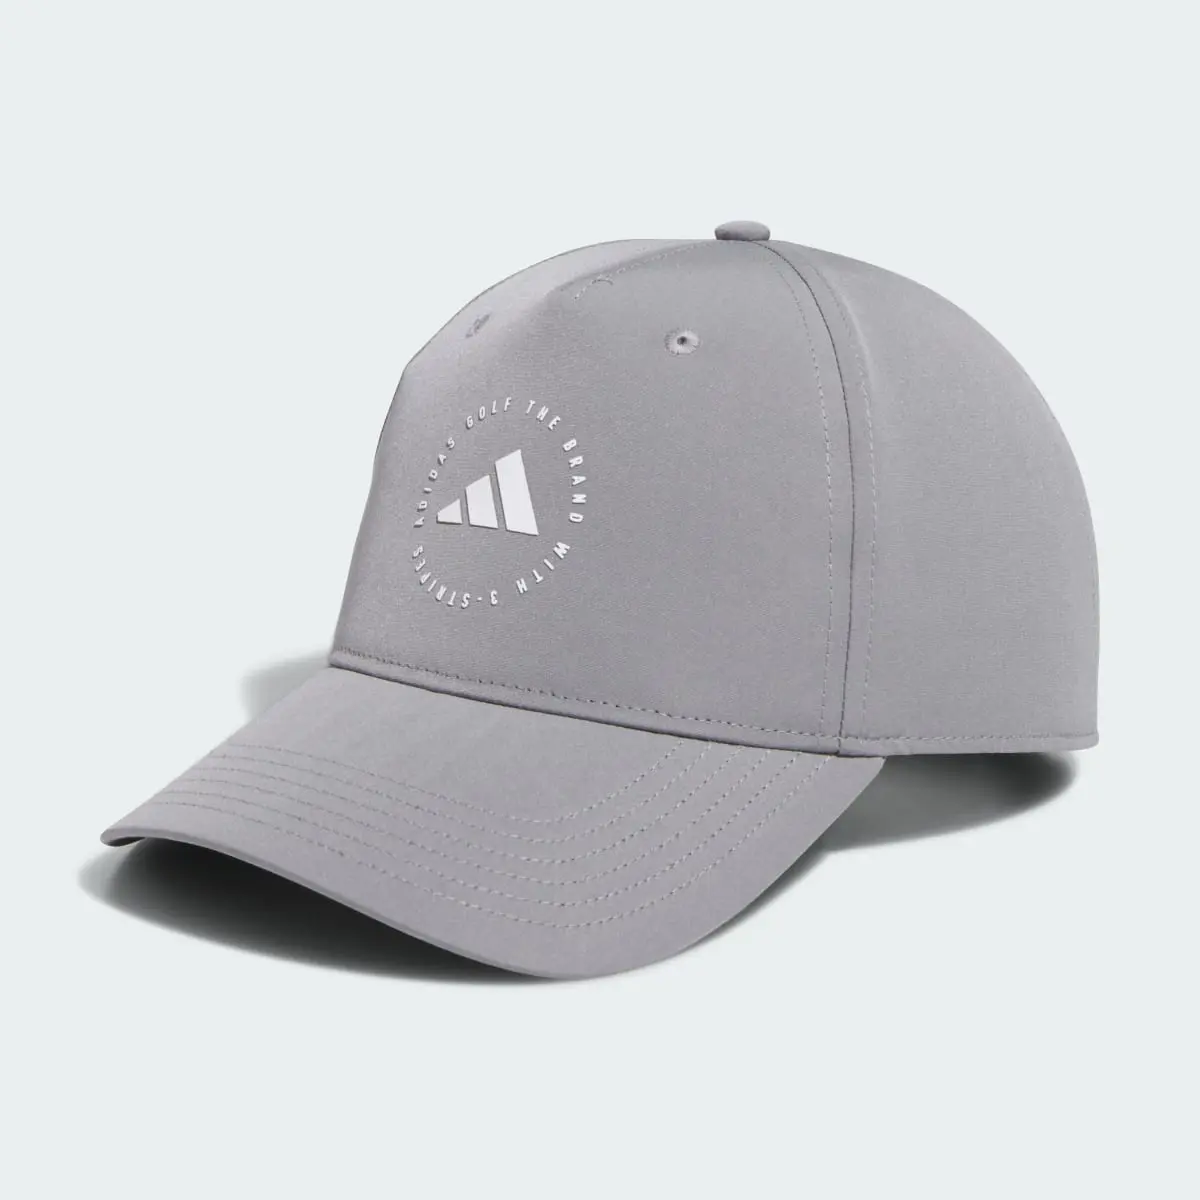 Adidas Golf Performance Hat. 2